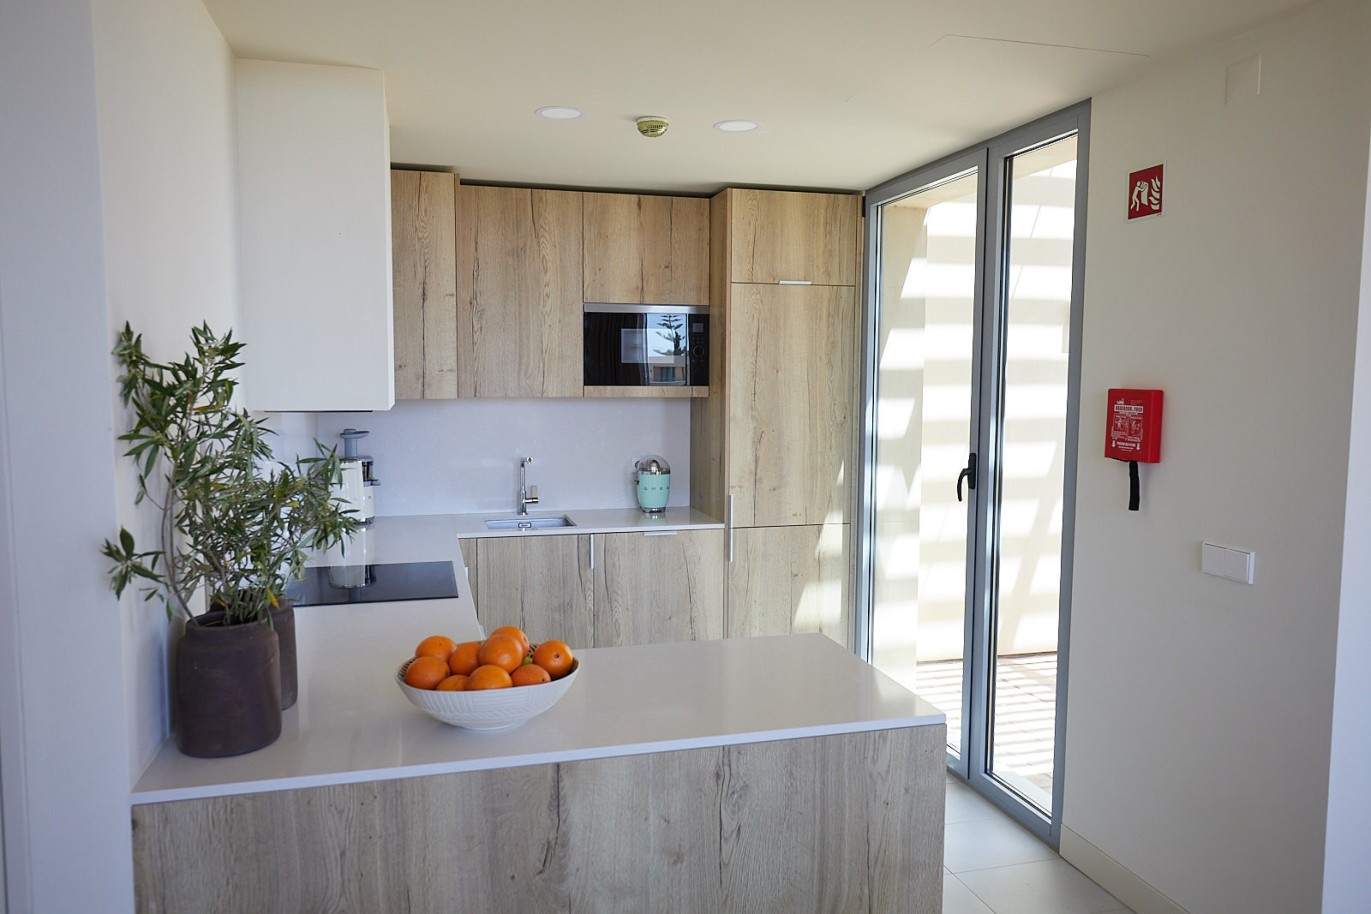 2 bedroom apartment in resort, for sale in Porches, Algarve_229106